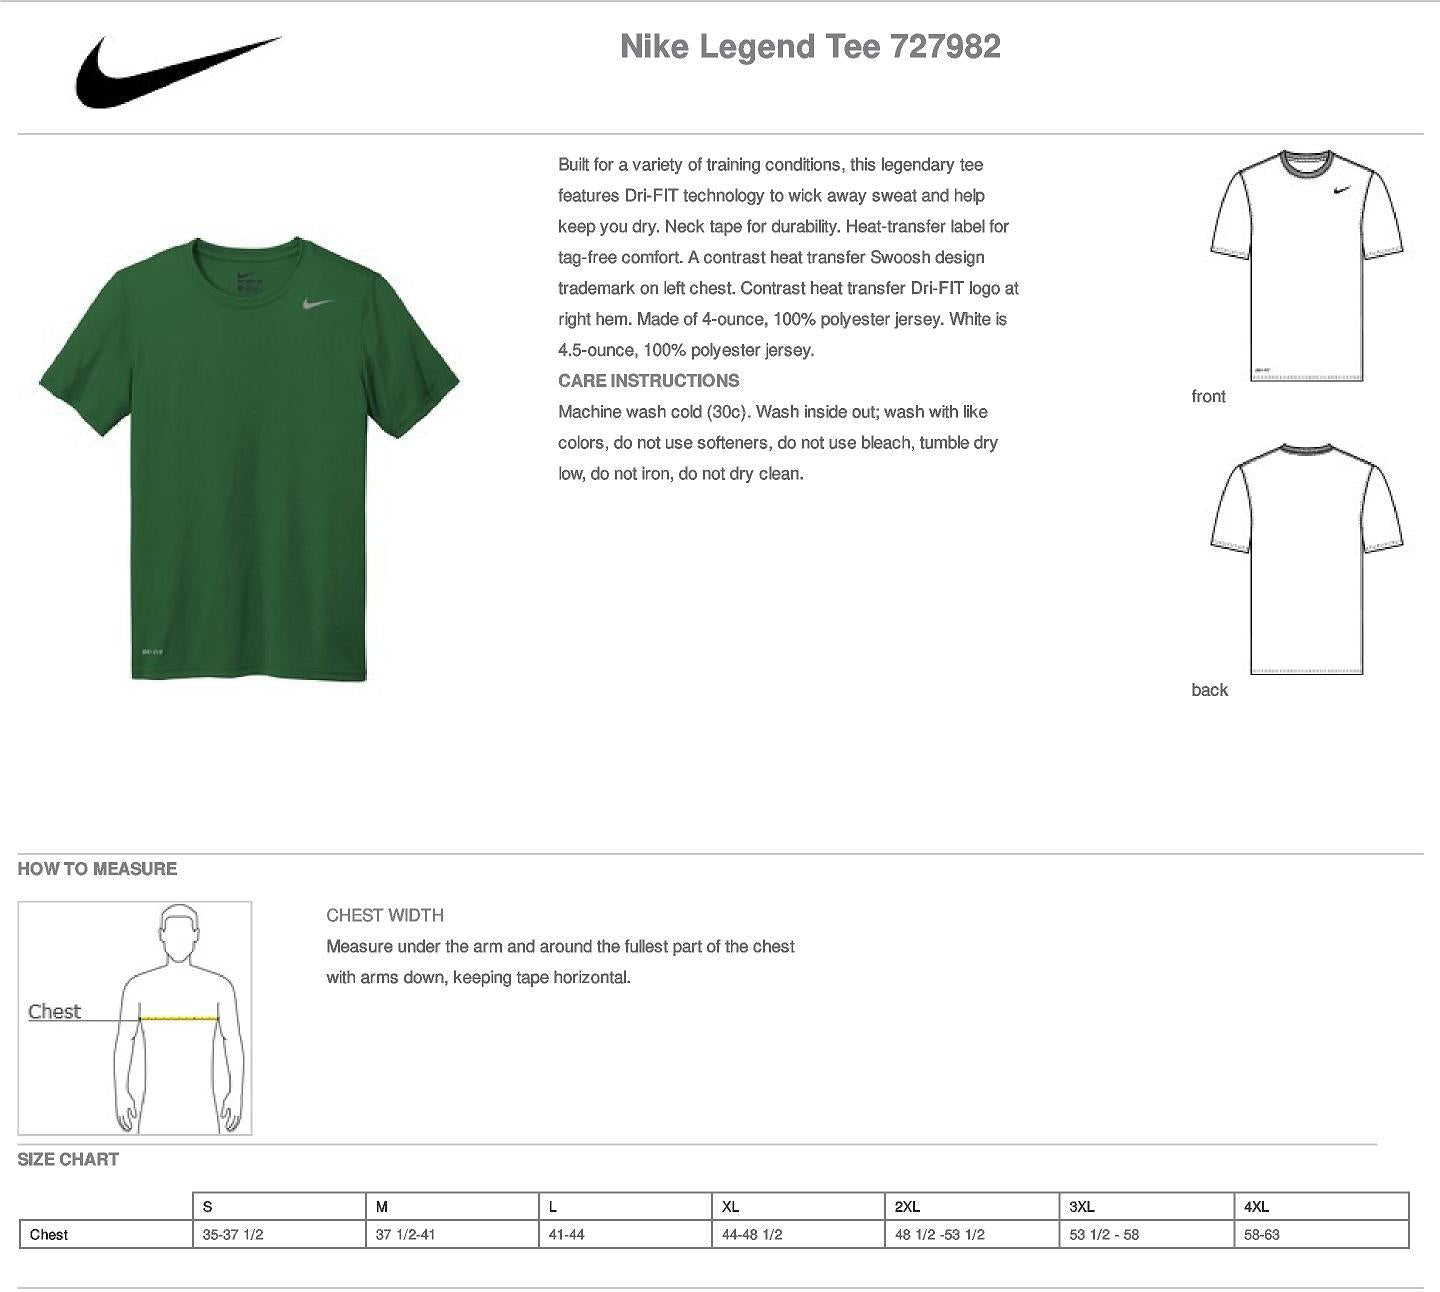 Nike Legend Tee 2404